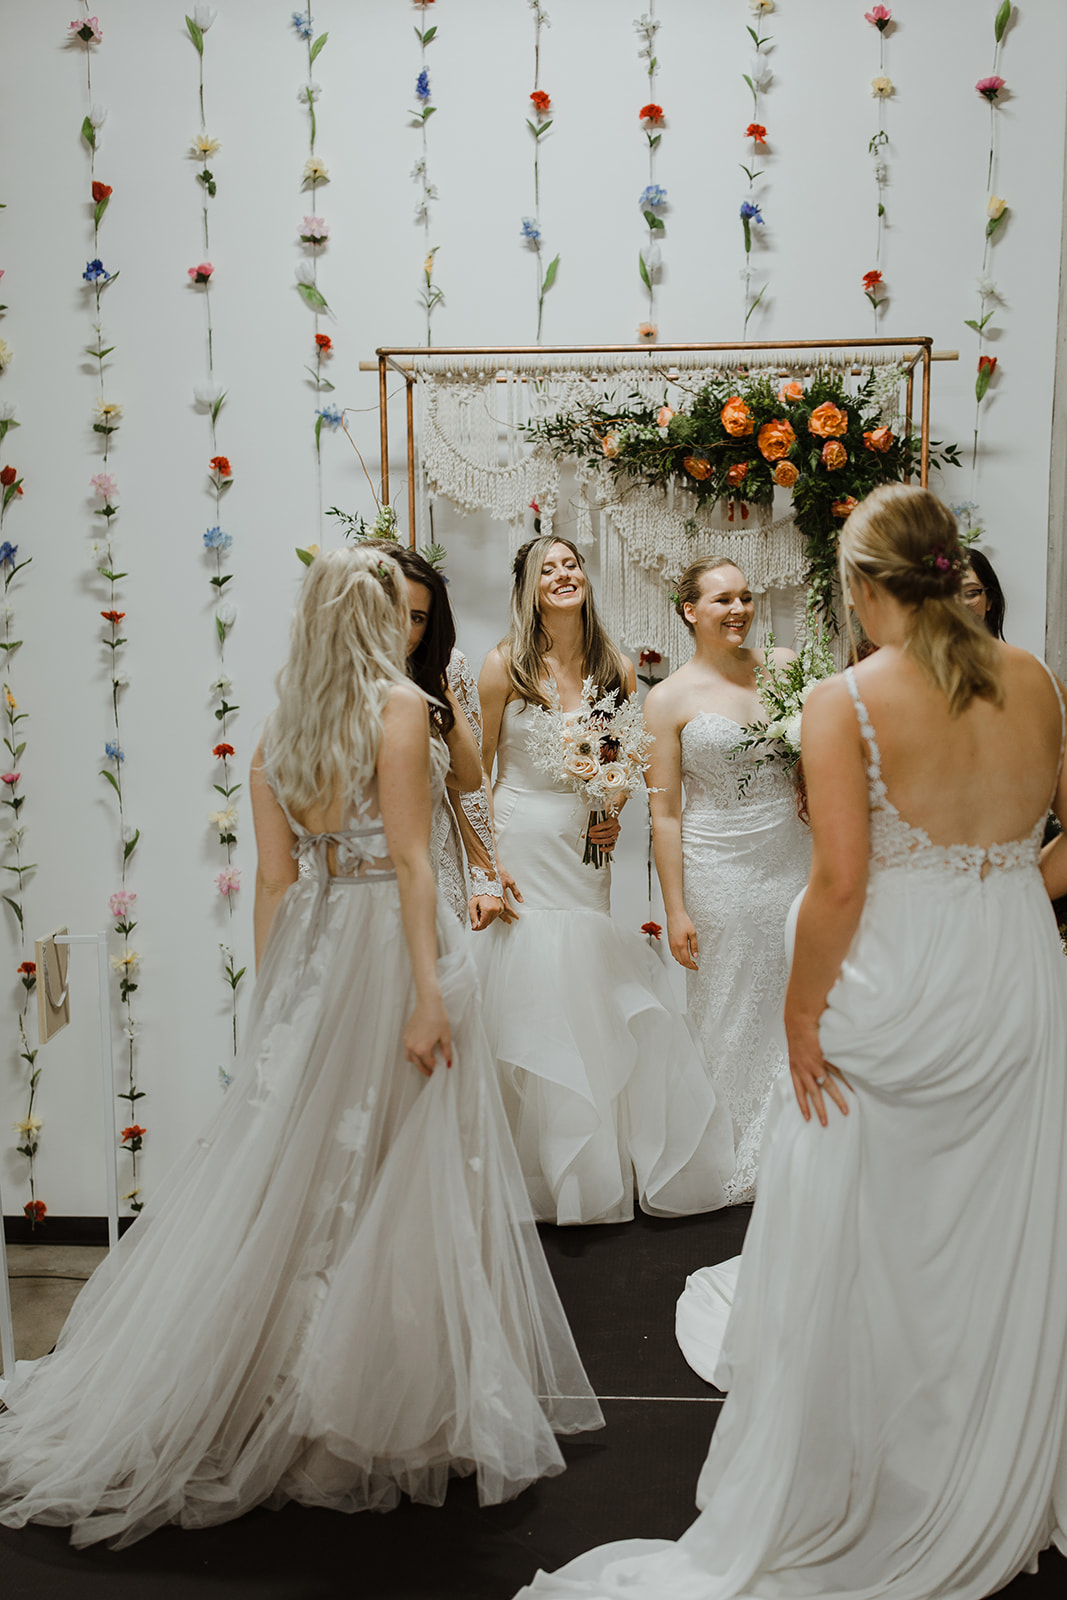 spokane wedding dress end of fashion show brides on runway laughing